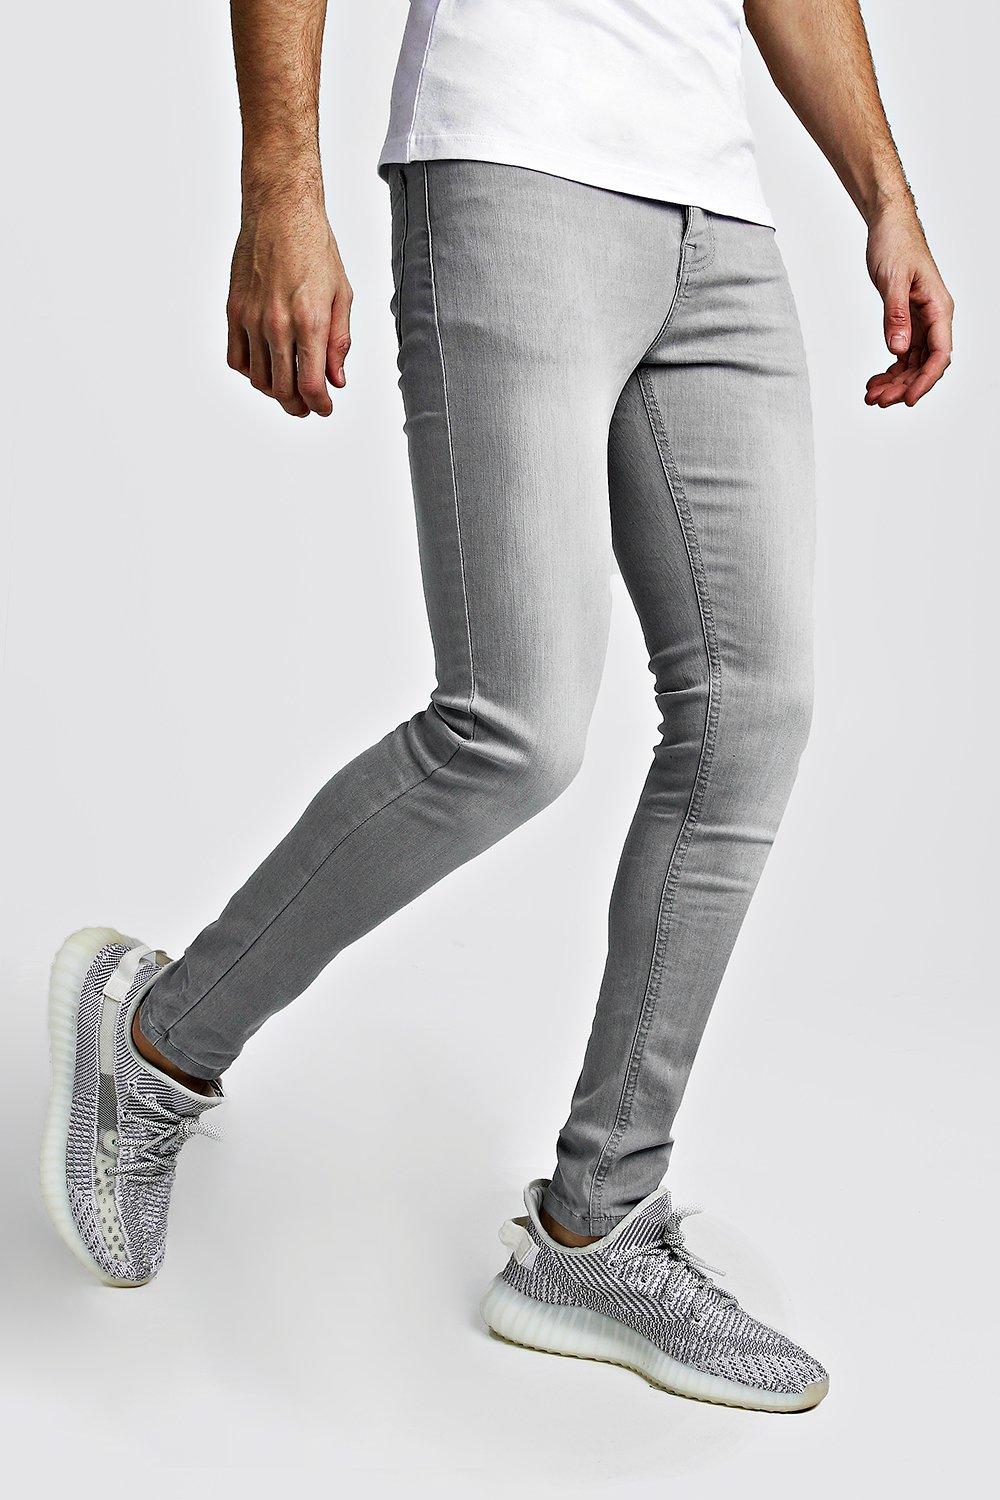 light grey jeans